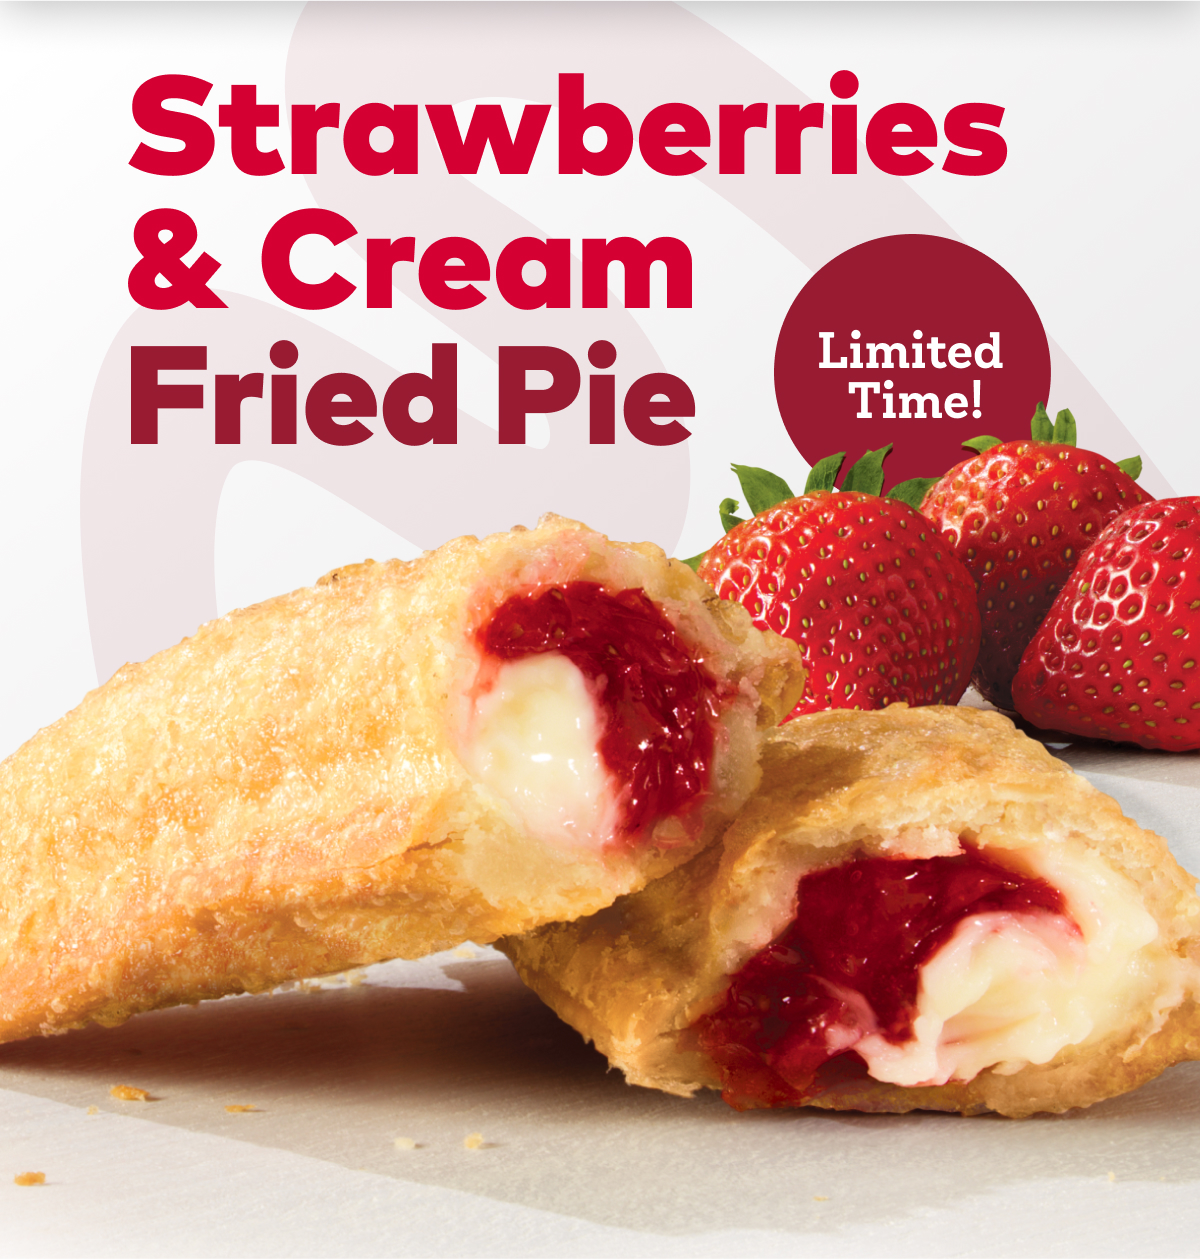 Strawberries and Cream Fried Pie